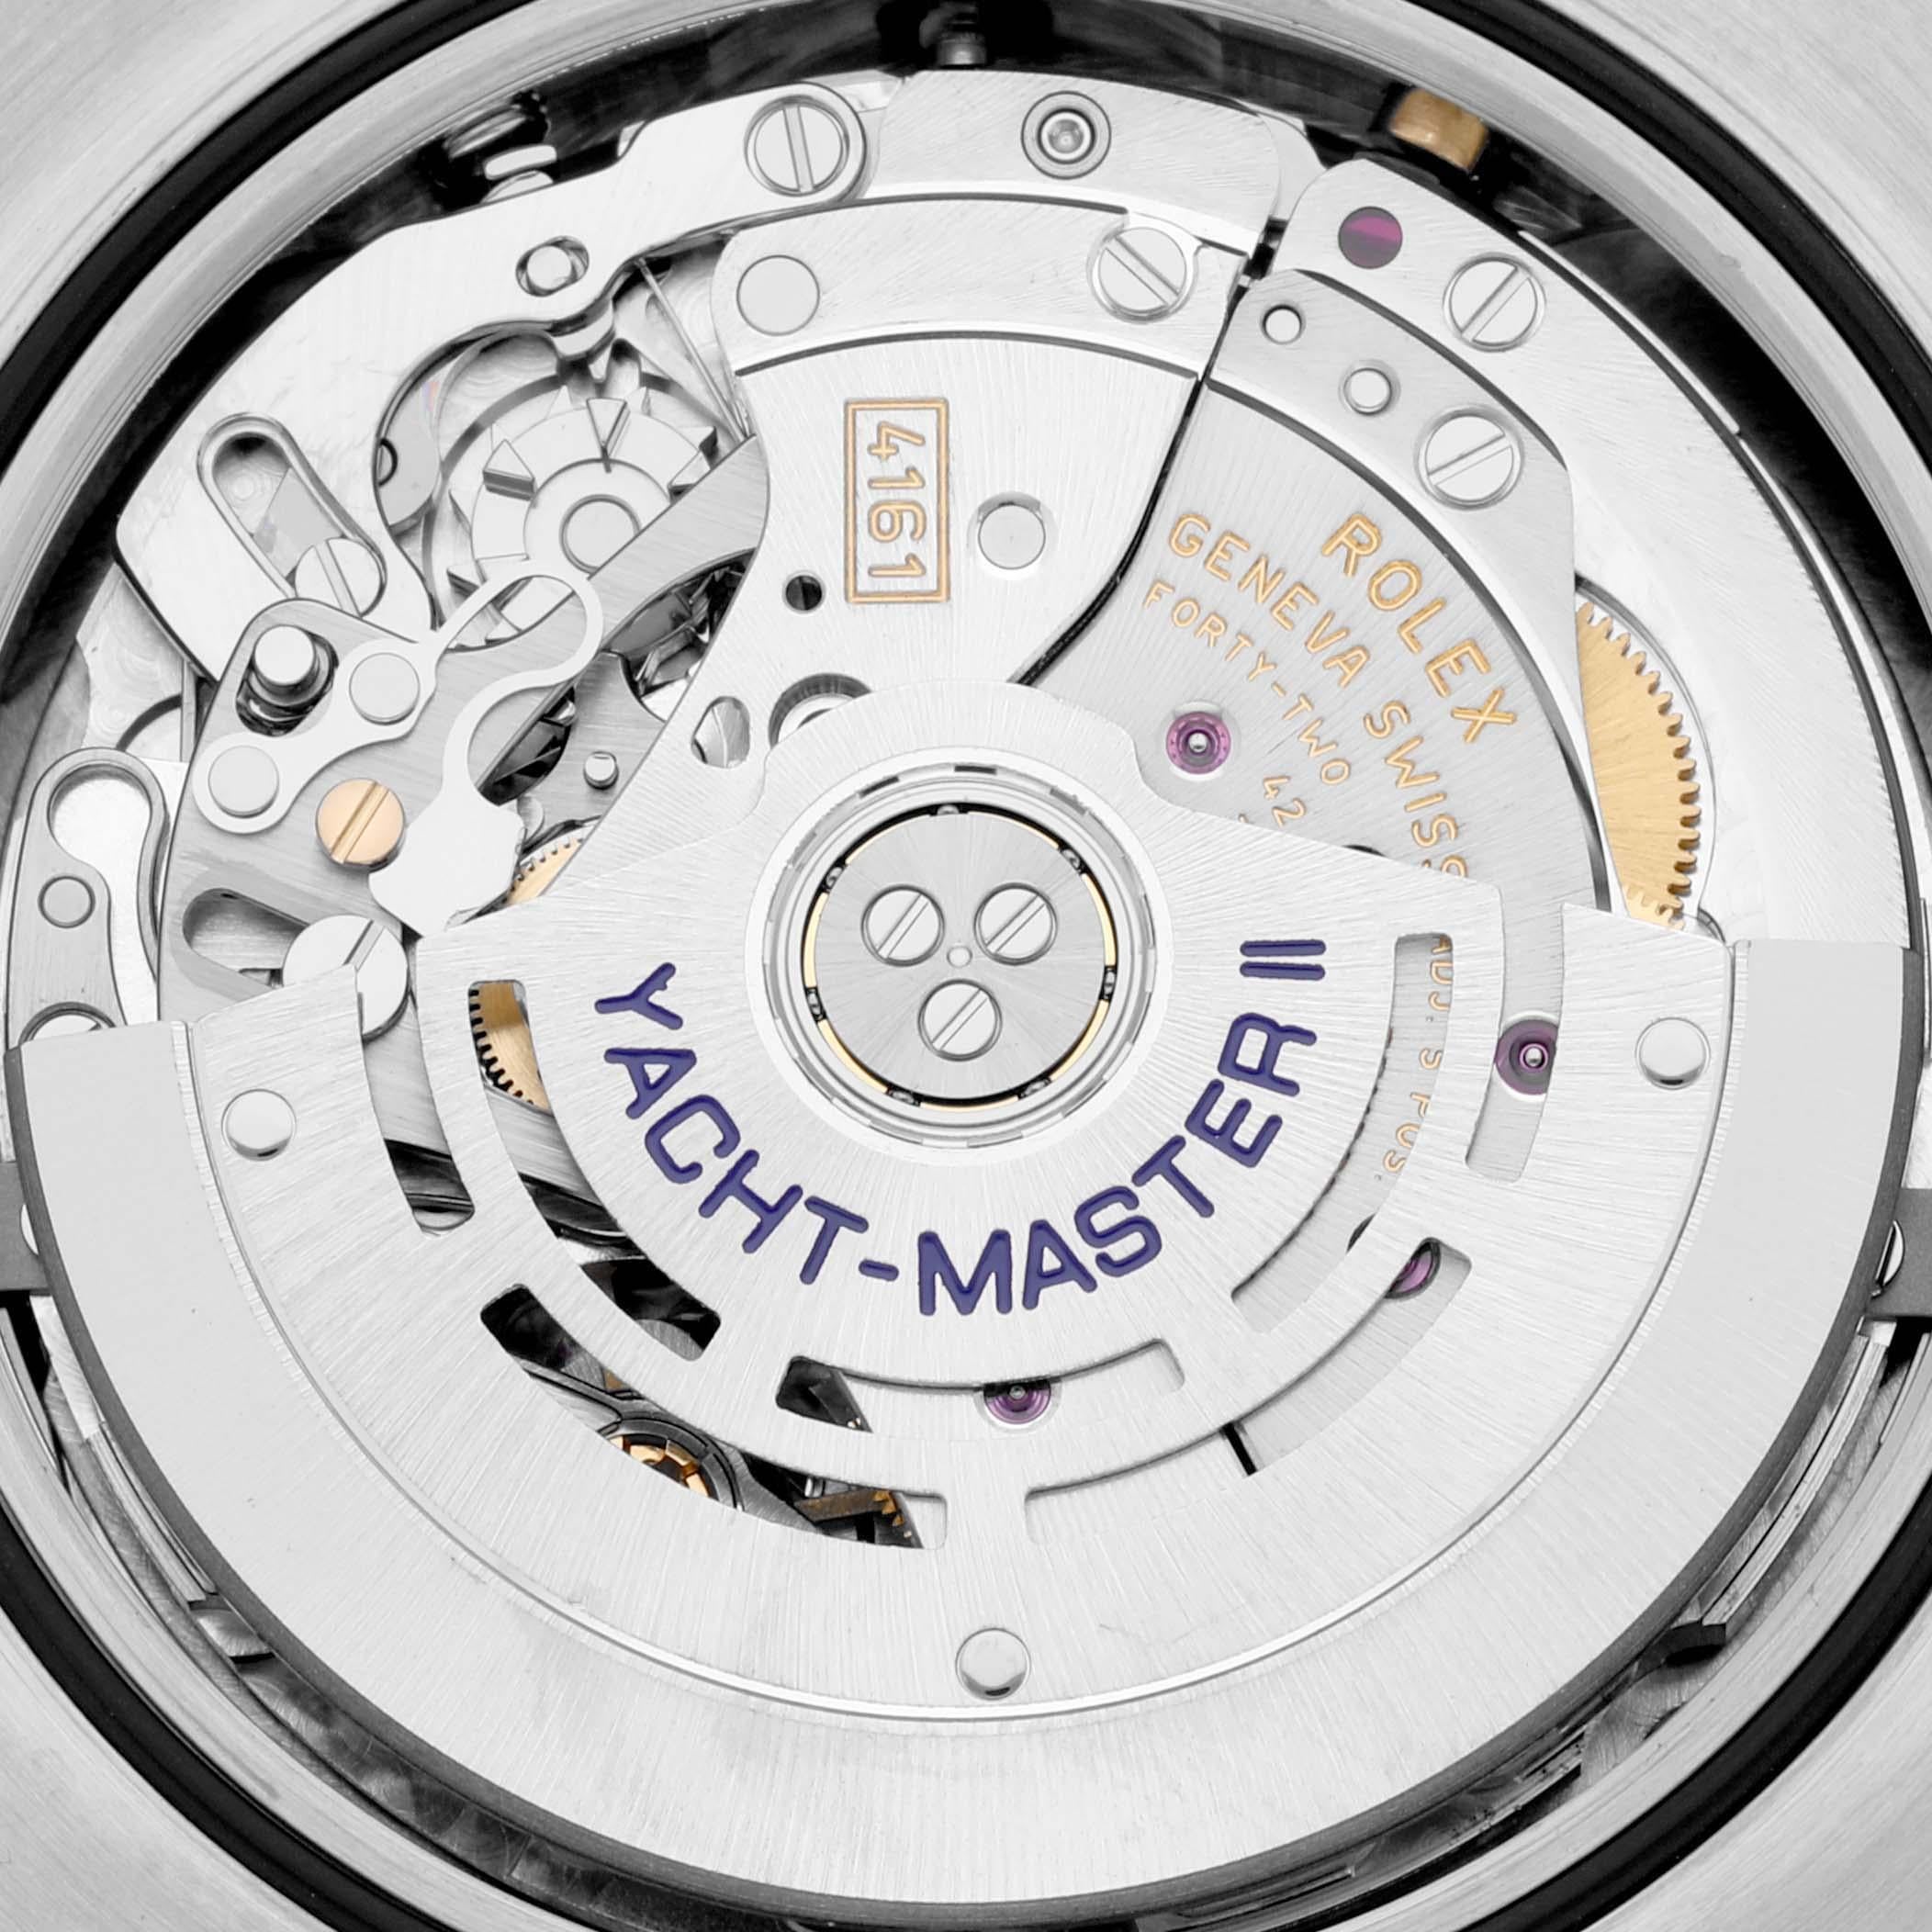 Rolex Yachtmaster II Regatta White Gold Platinum Mens Watch 116689 Box Card 5